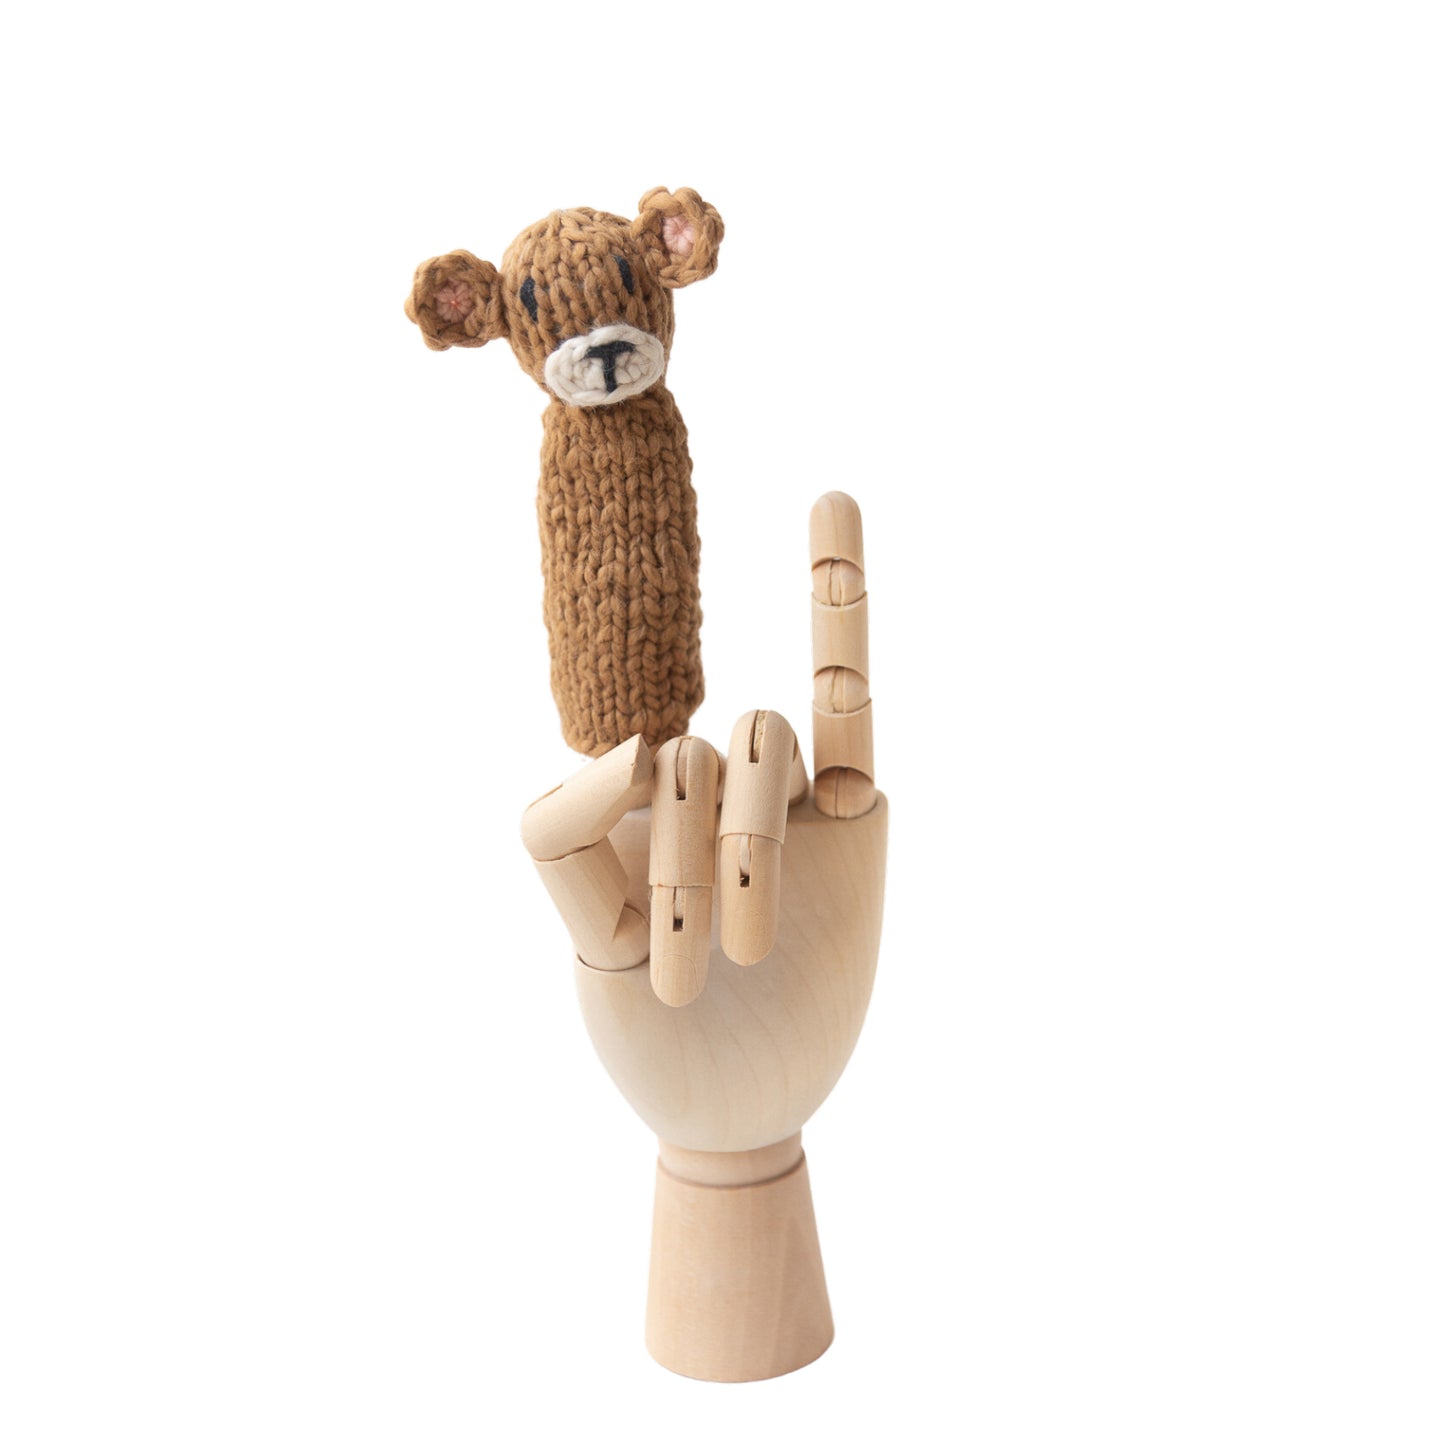 Hand-Knit Finger Puppet Set - Safari